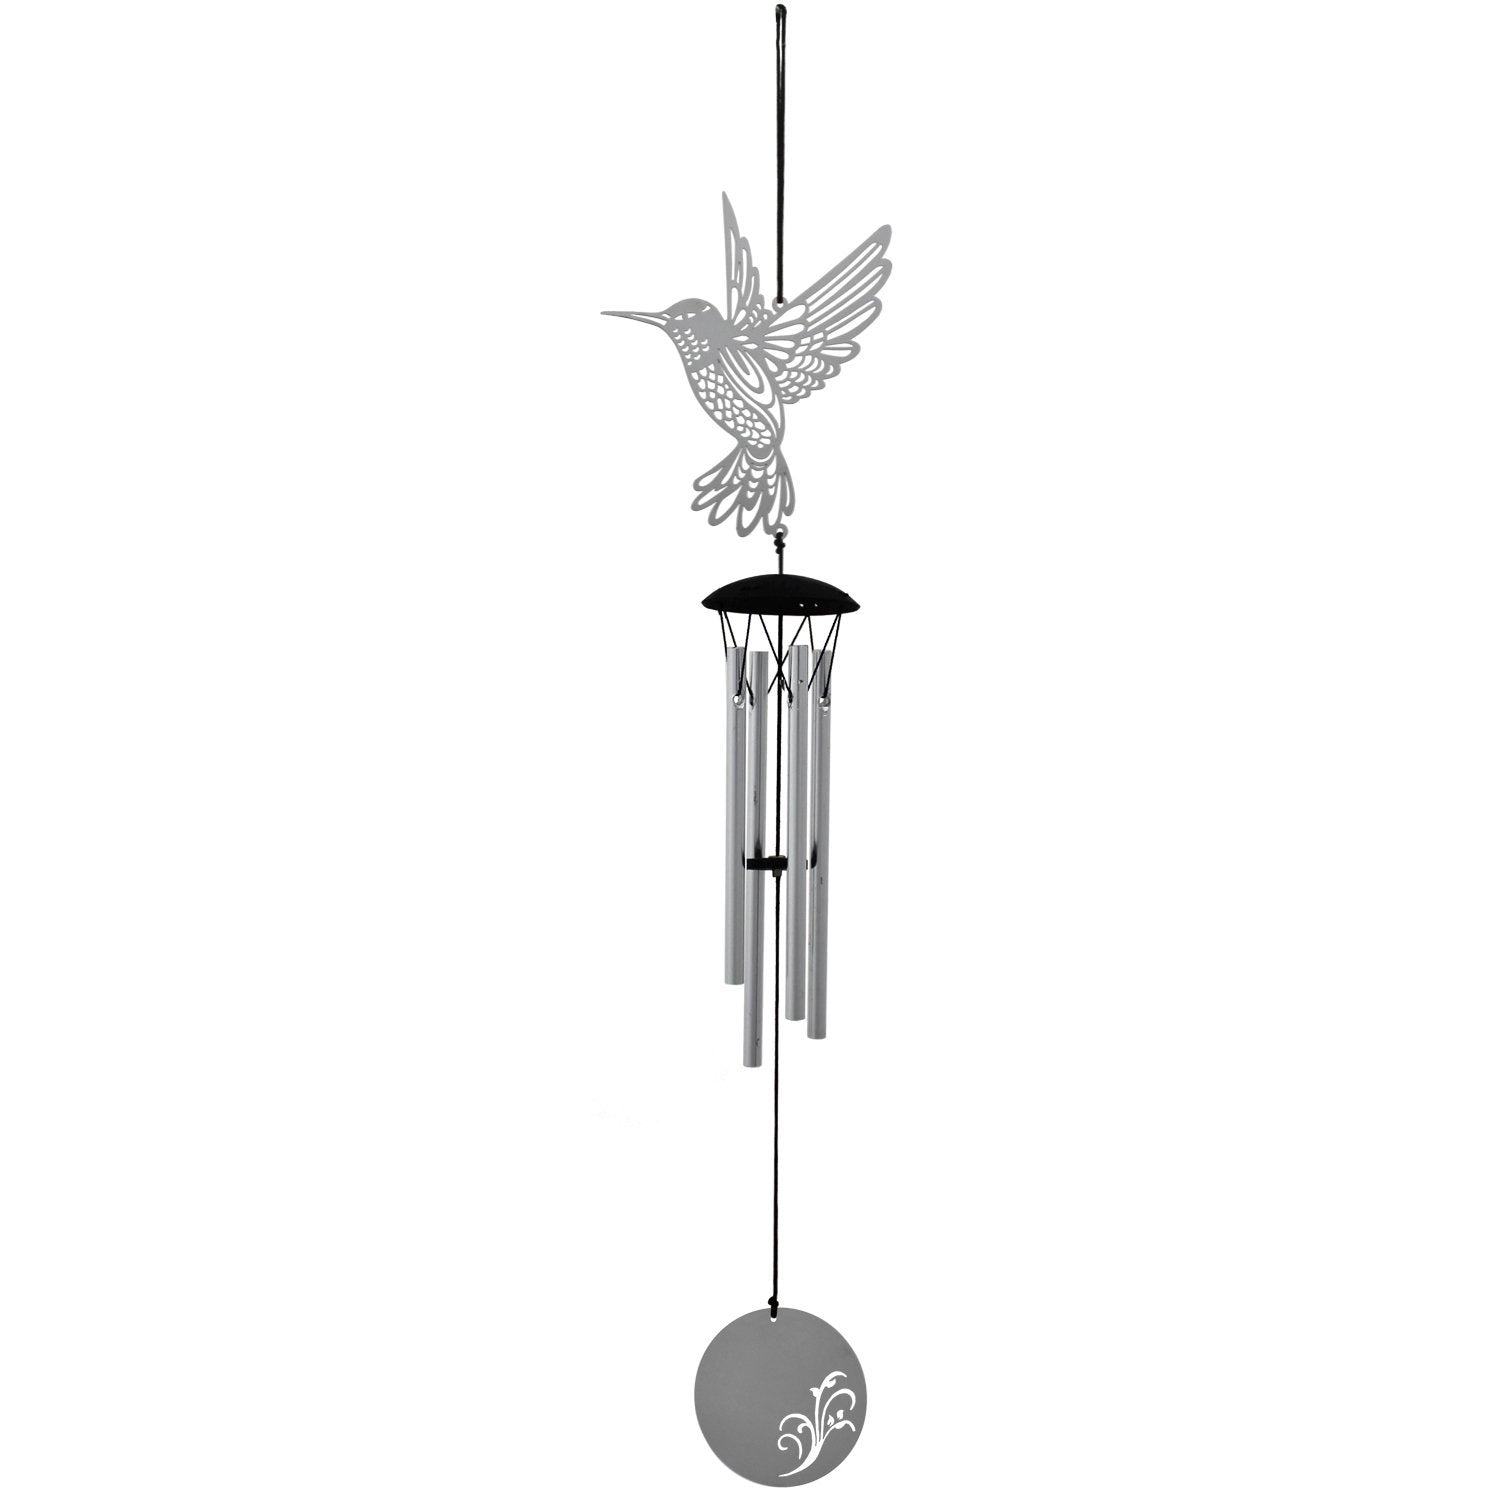 Flourish Chime - Hummingbird full product image